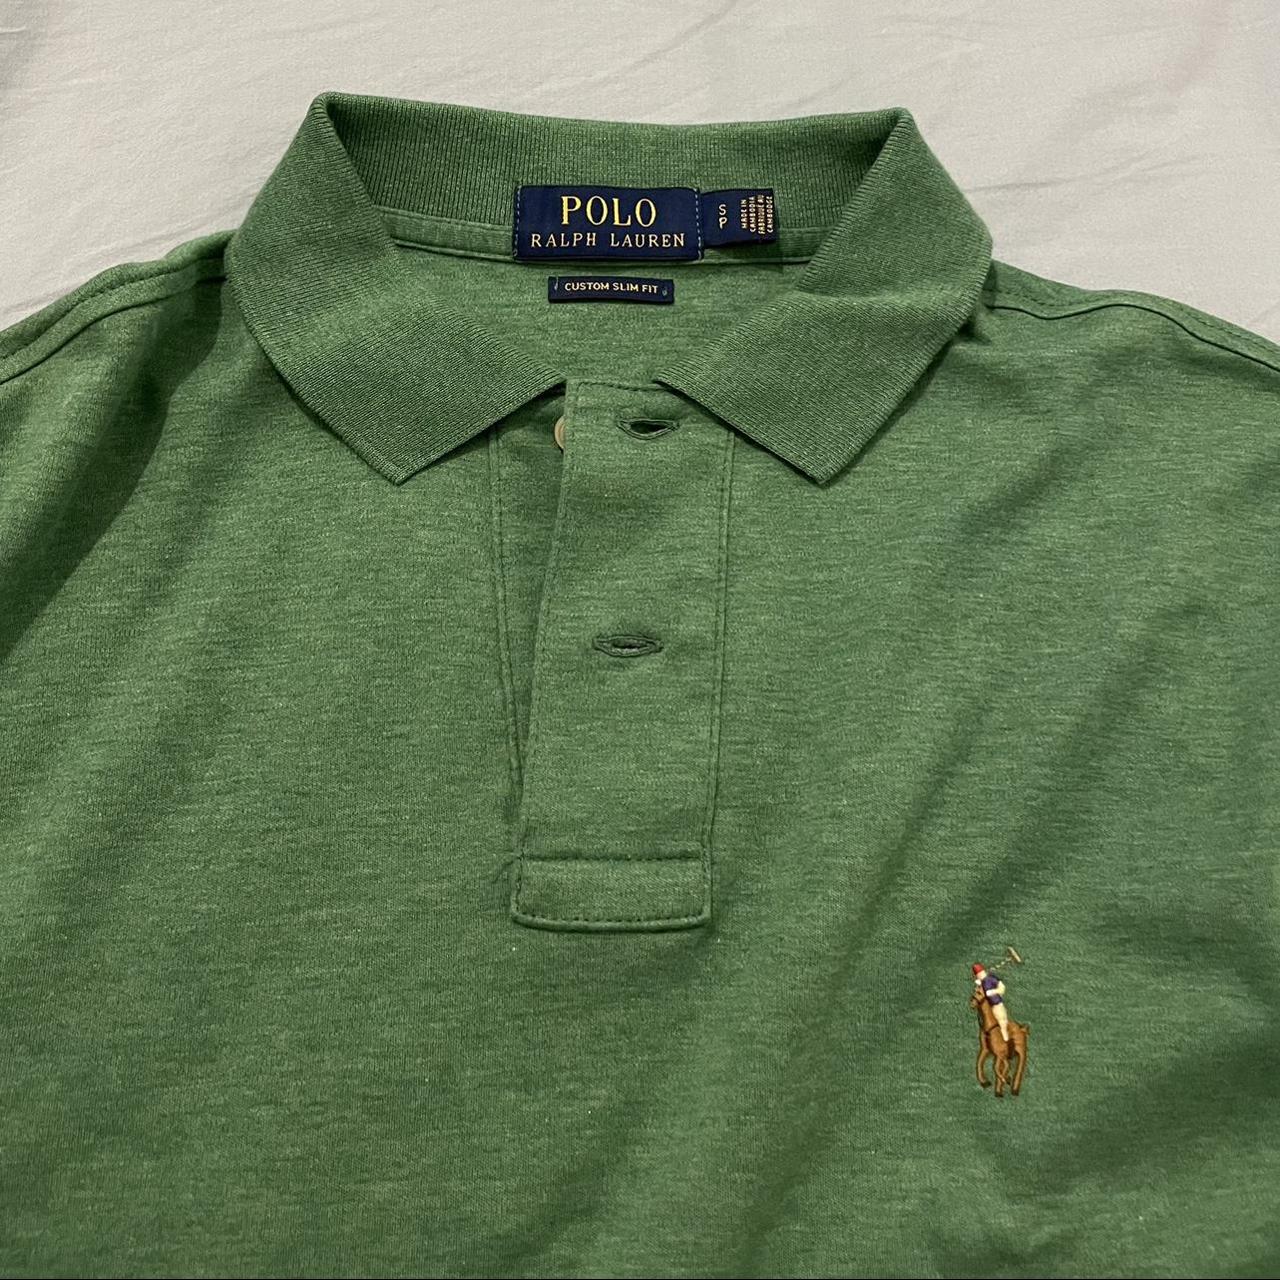 Polo ralph lauren polo shirt Size S custom slim... - Depop